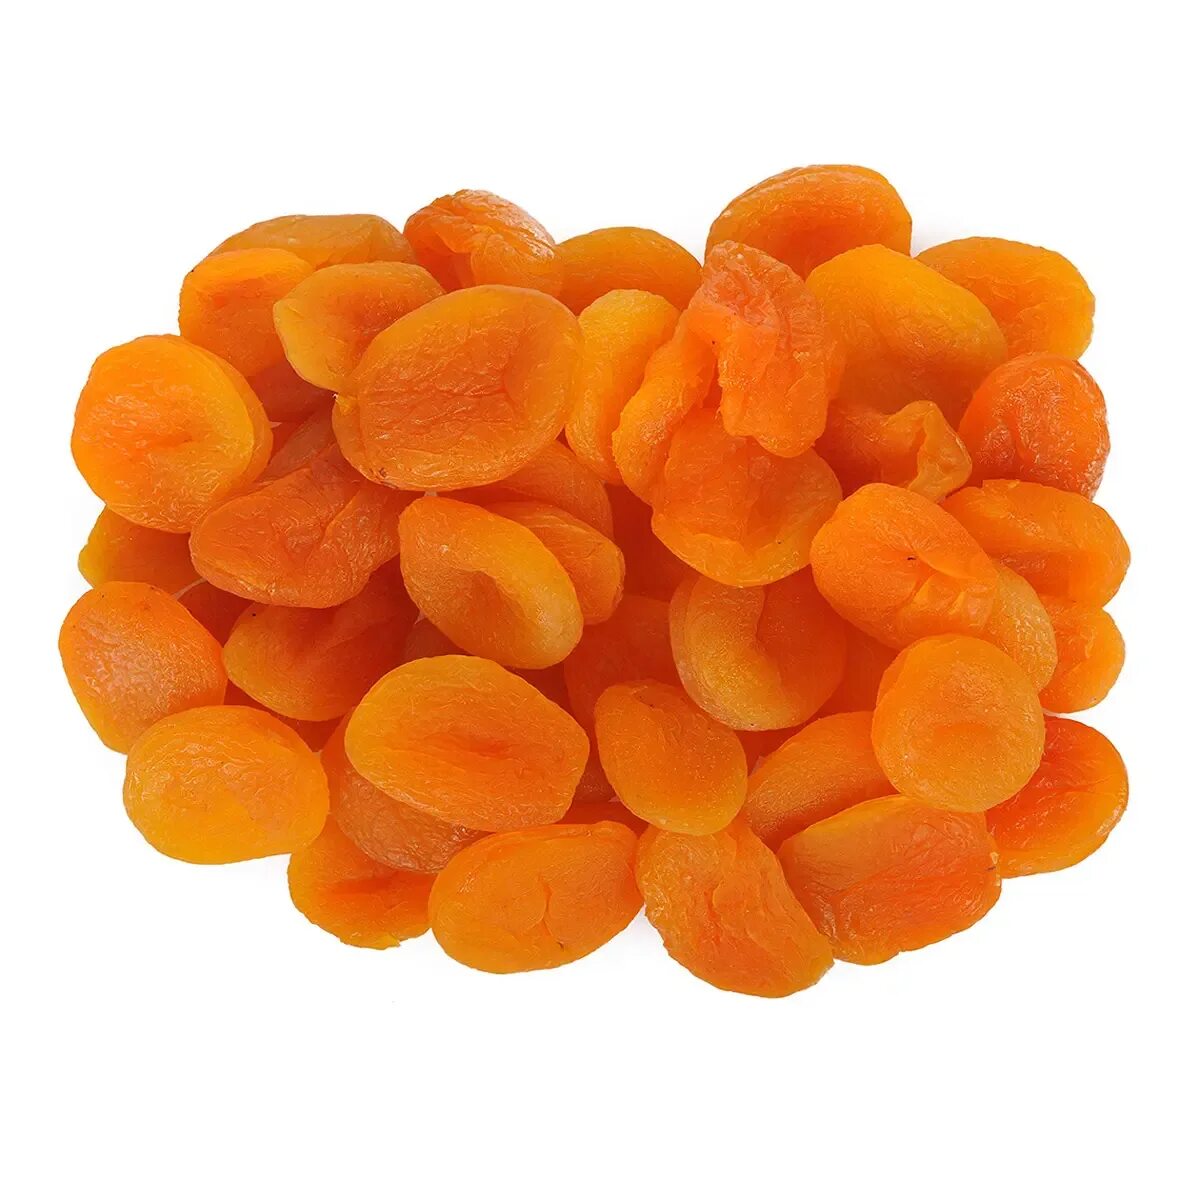 Курага калорийность на 100 без косточки. Turkish dried Apricots 250гр. Урюк сушеный. Курага одна штука. Абрикос без косточки.